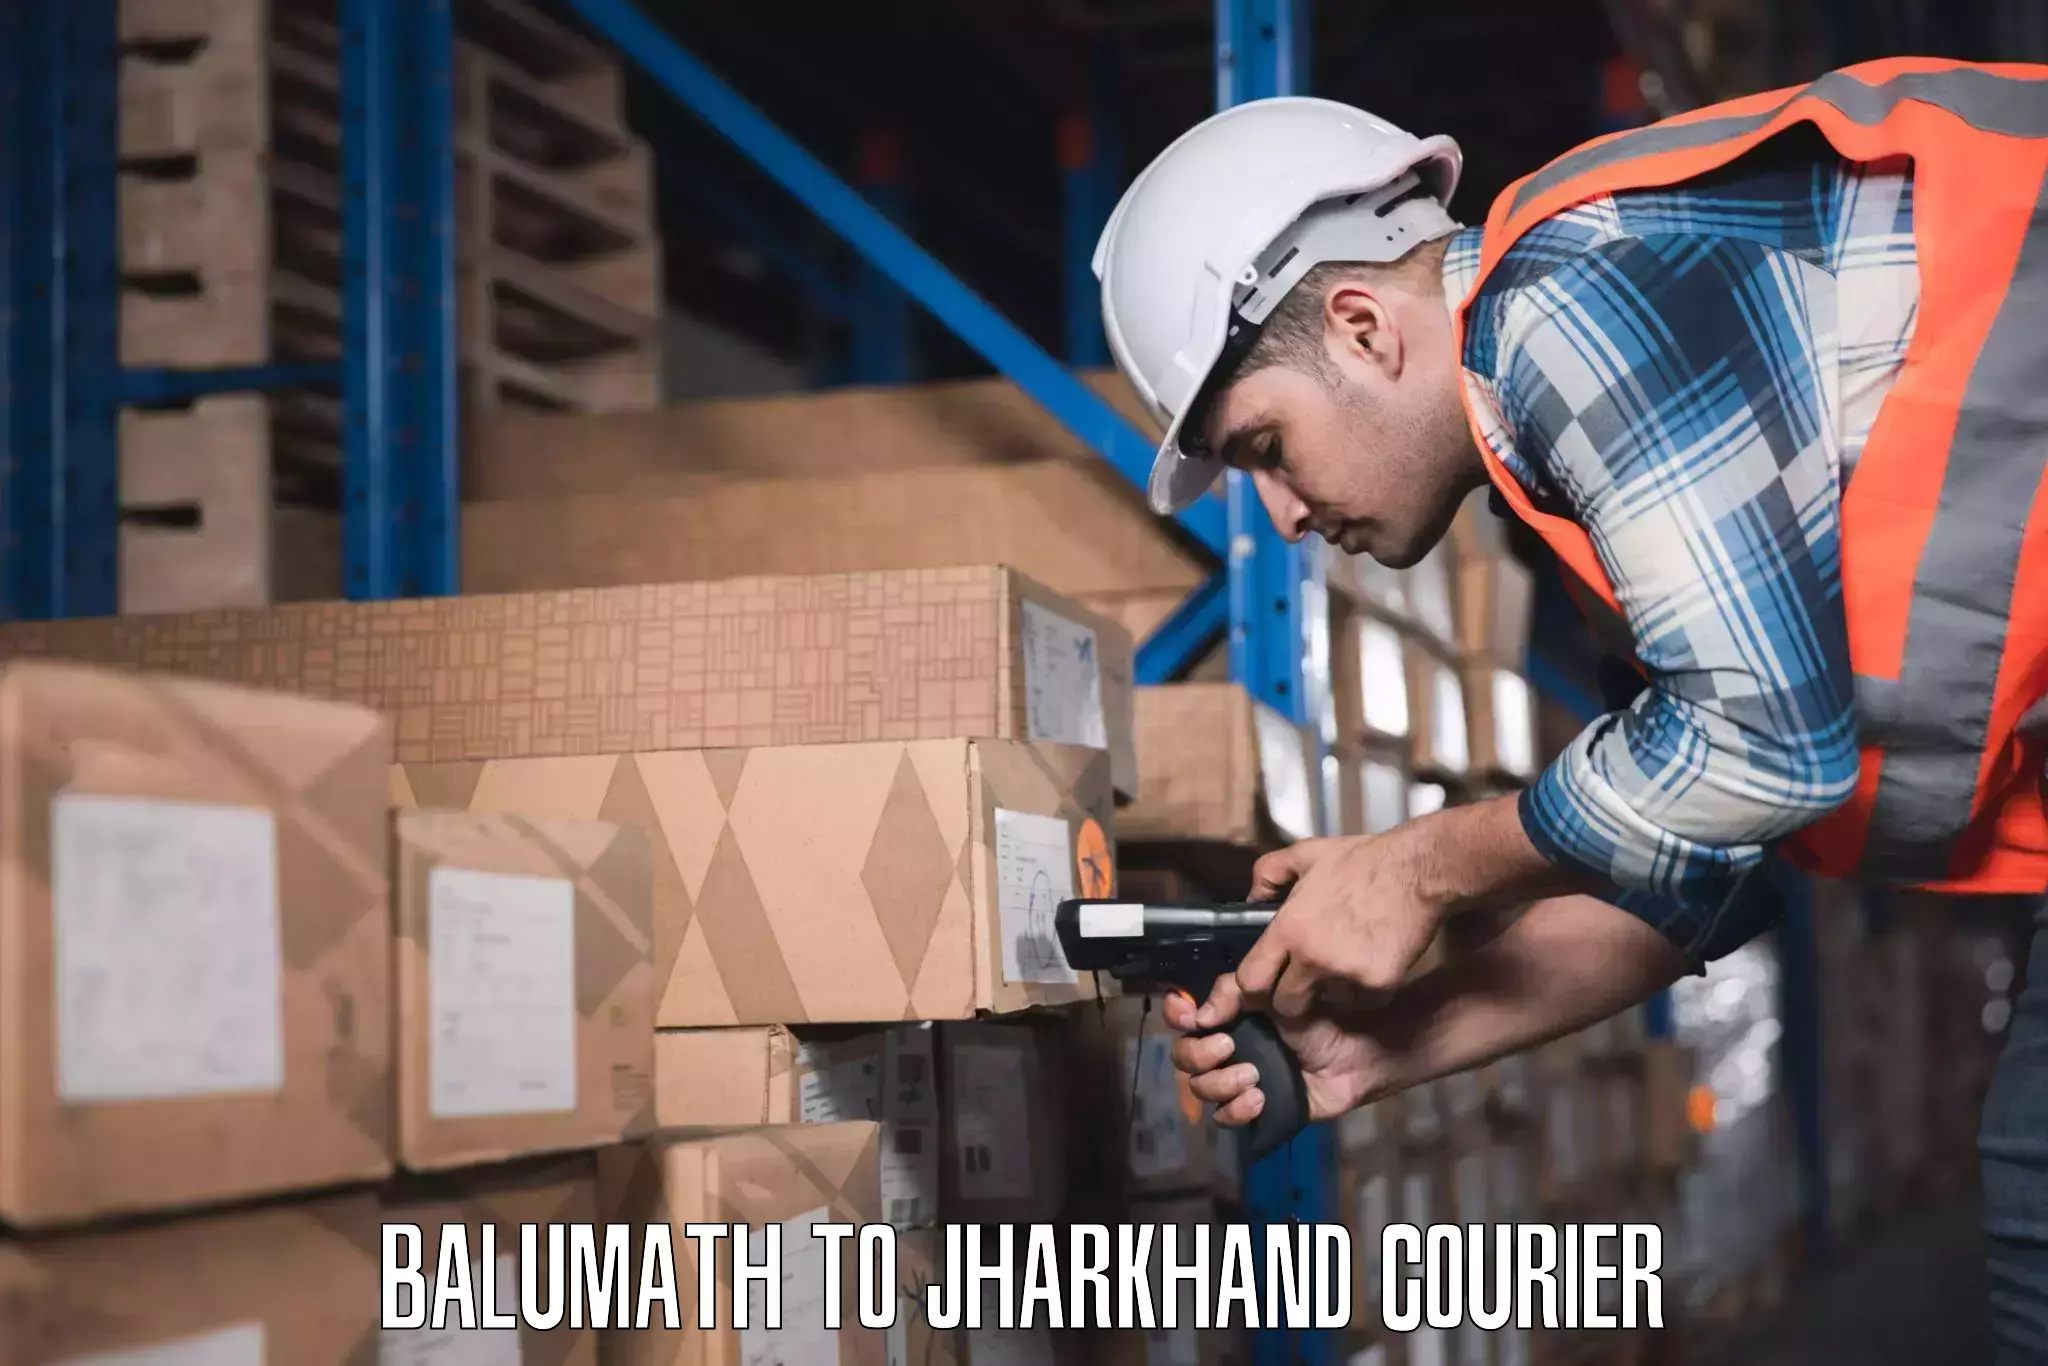 Luggage shipment strategy Balumath to Balumath